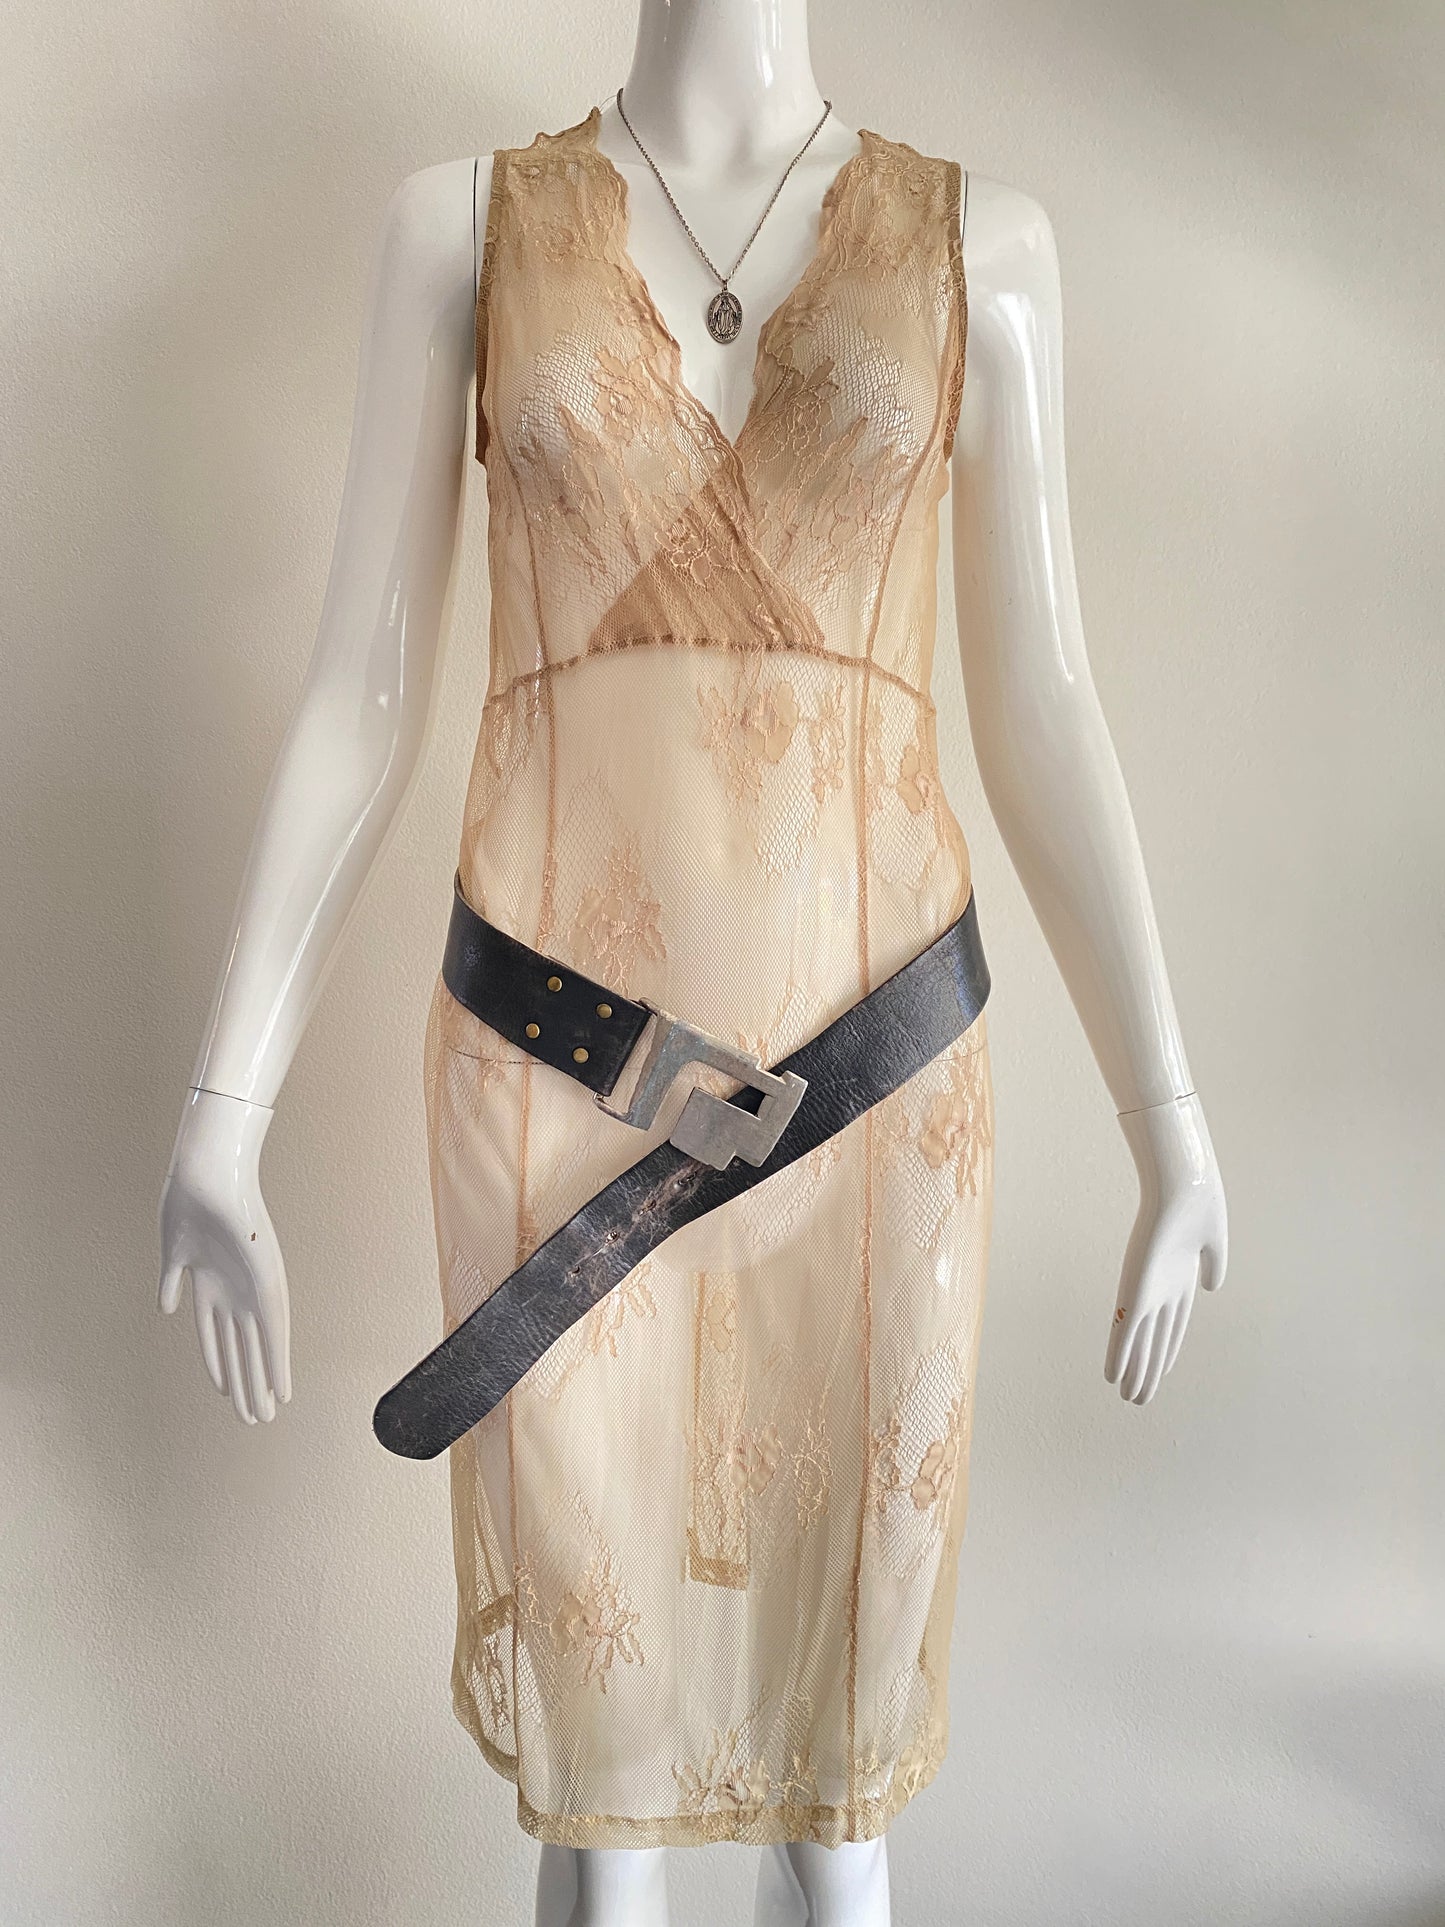 00's Bebe Moda Nude Lace Midi Dress